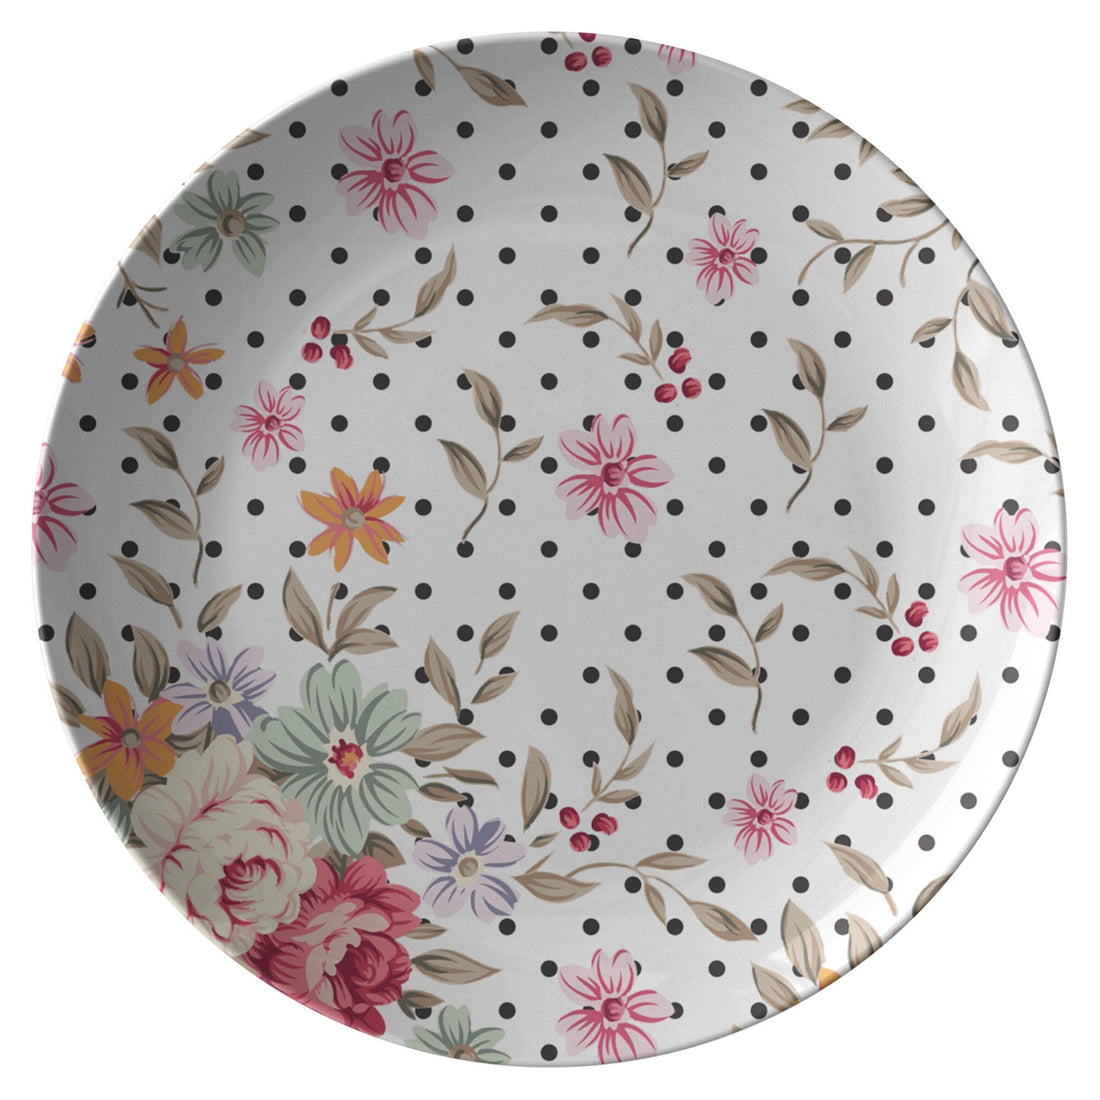 Kate McEnroe New York Dinner Plates in Luxurious Polka Dots Shabby Chic FloralPlates9820SINGLE